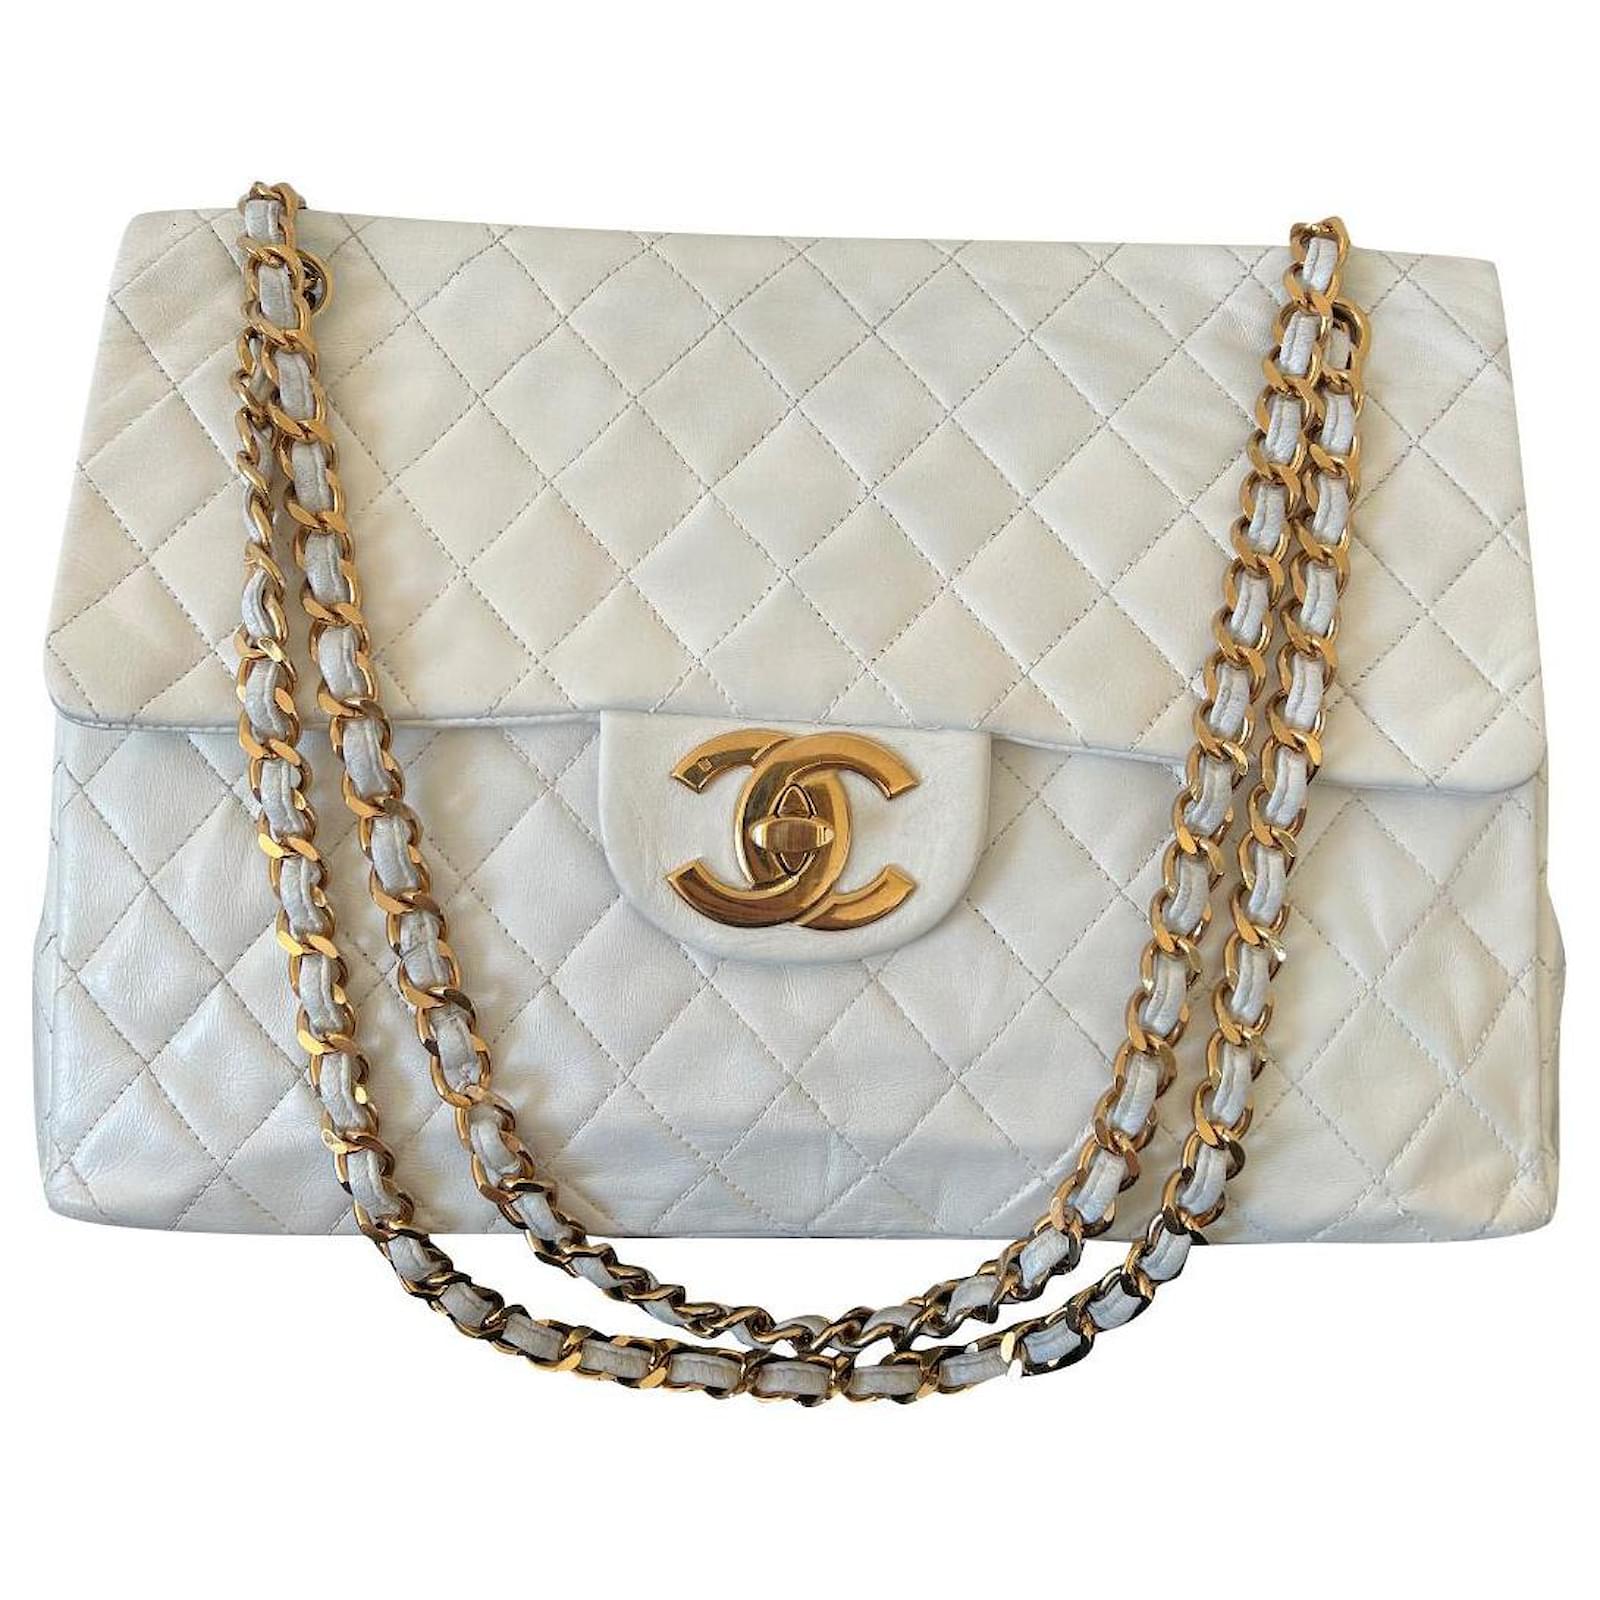 brand new chanel handbag white